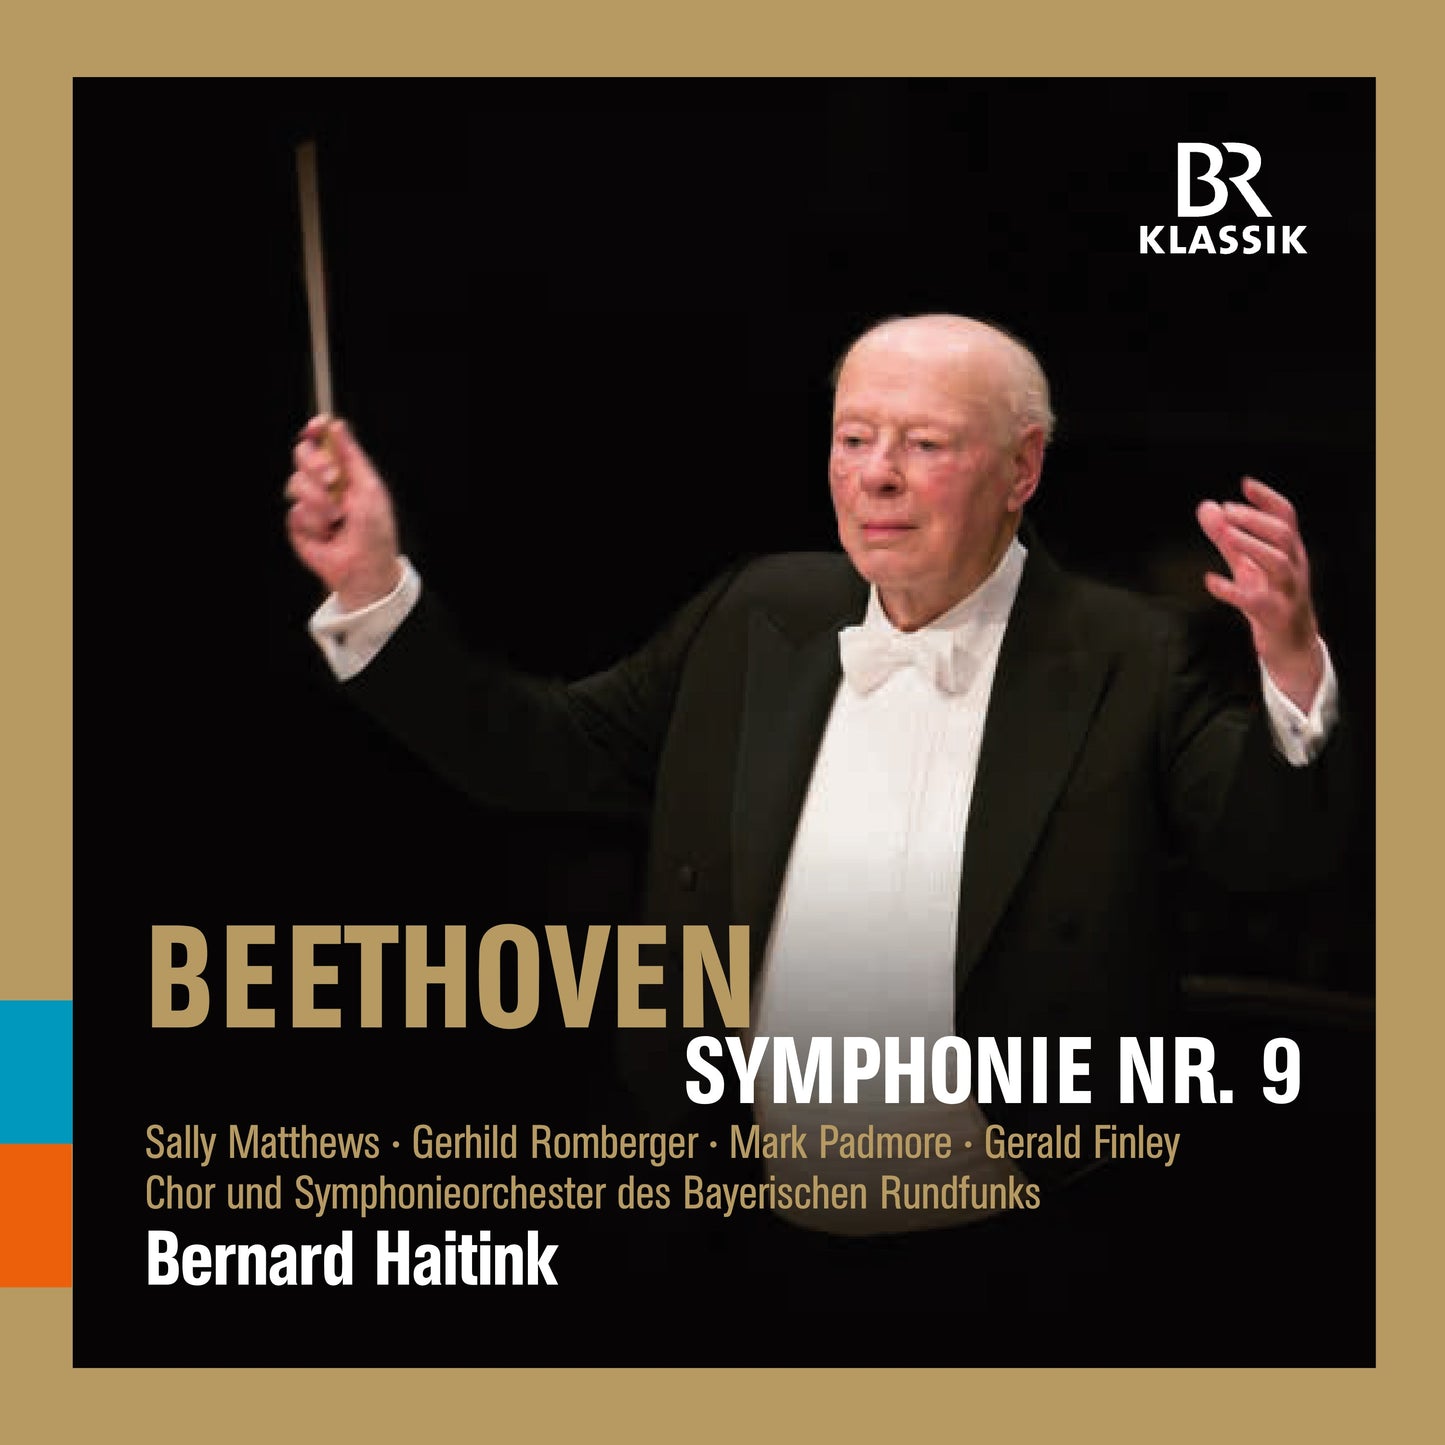 Beethoven: Symphony No. 9  Matthews, Romberger, Padmore, Finley, Symphonieorchester Des Bayerischen Rundfunks, Haitink